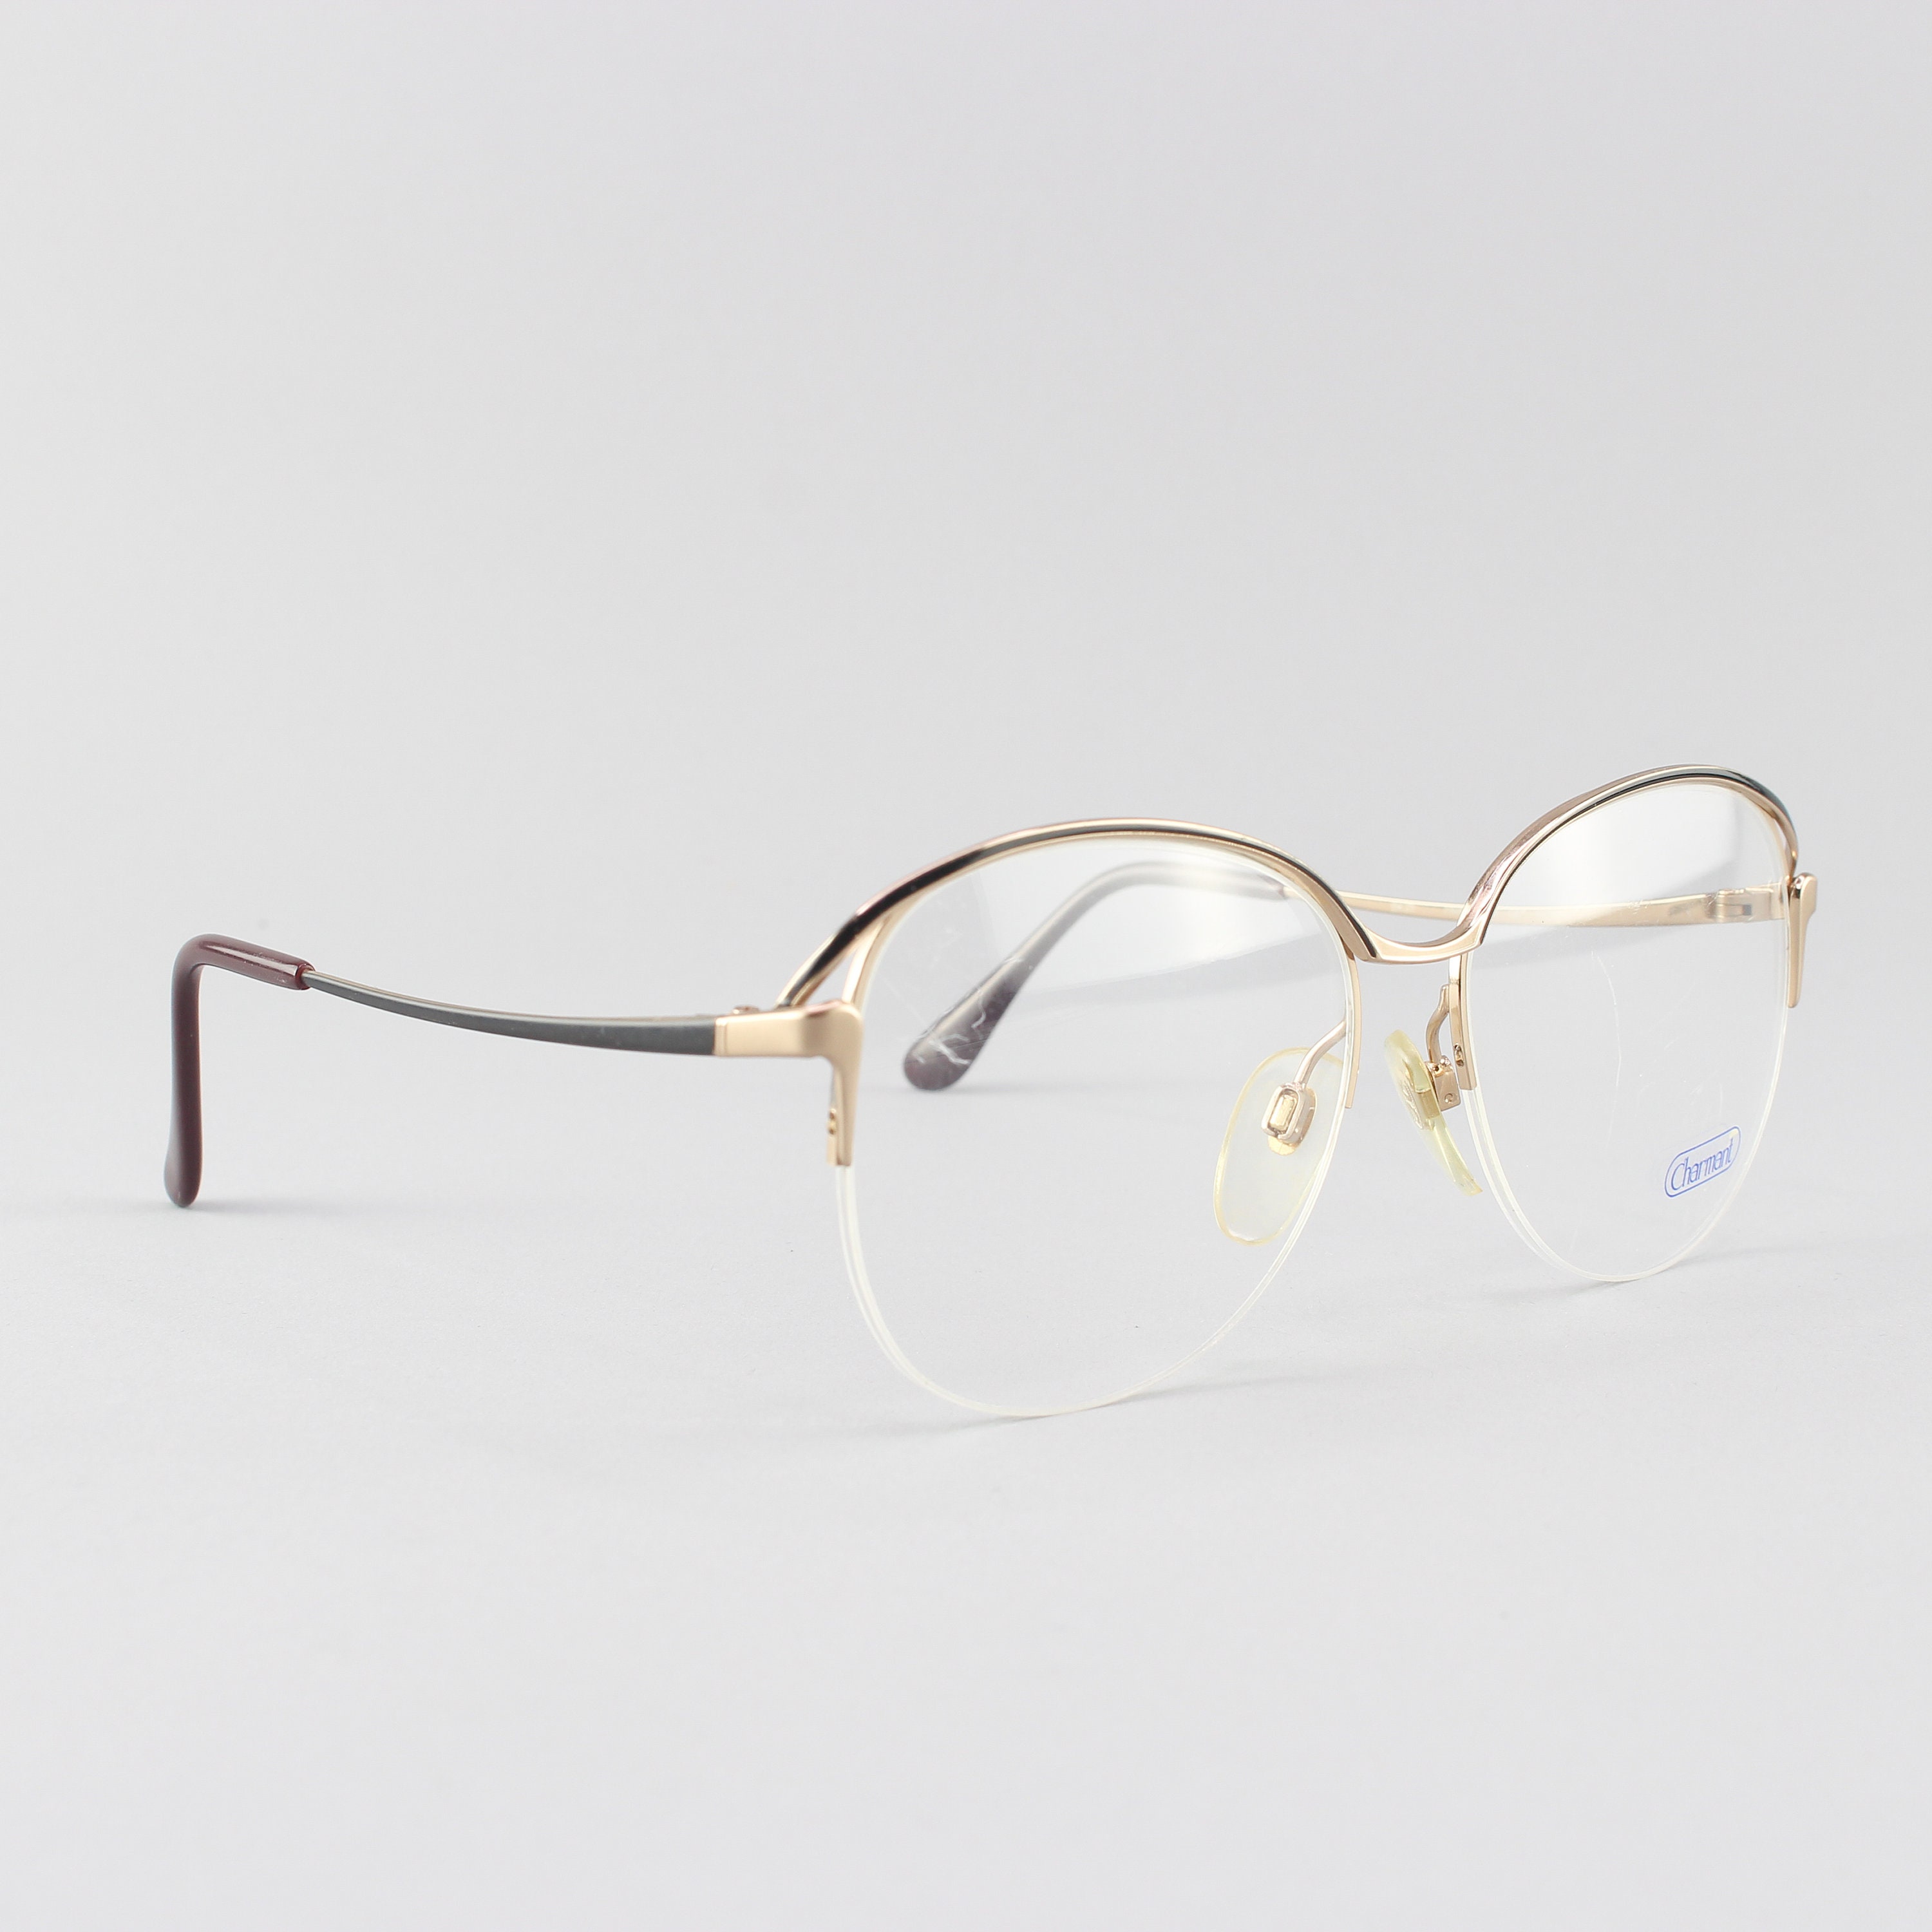 80s Glasses Vintage Eyeglasses Round Eyeglass Frame 1980s Look 4410